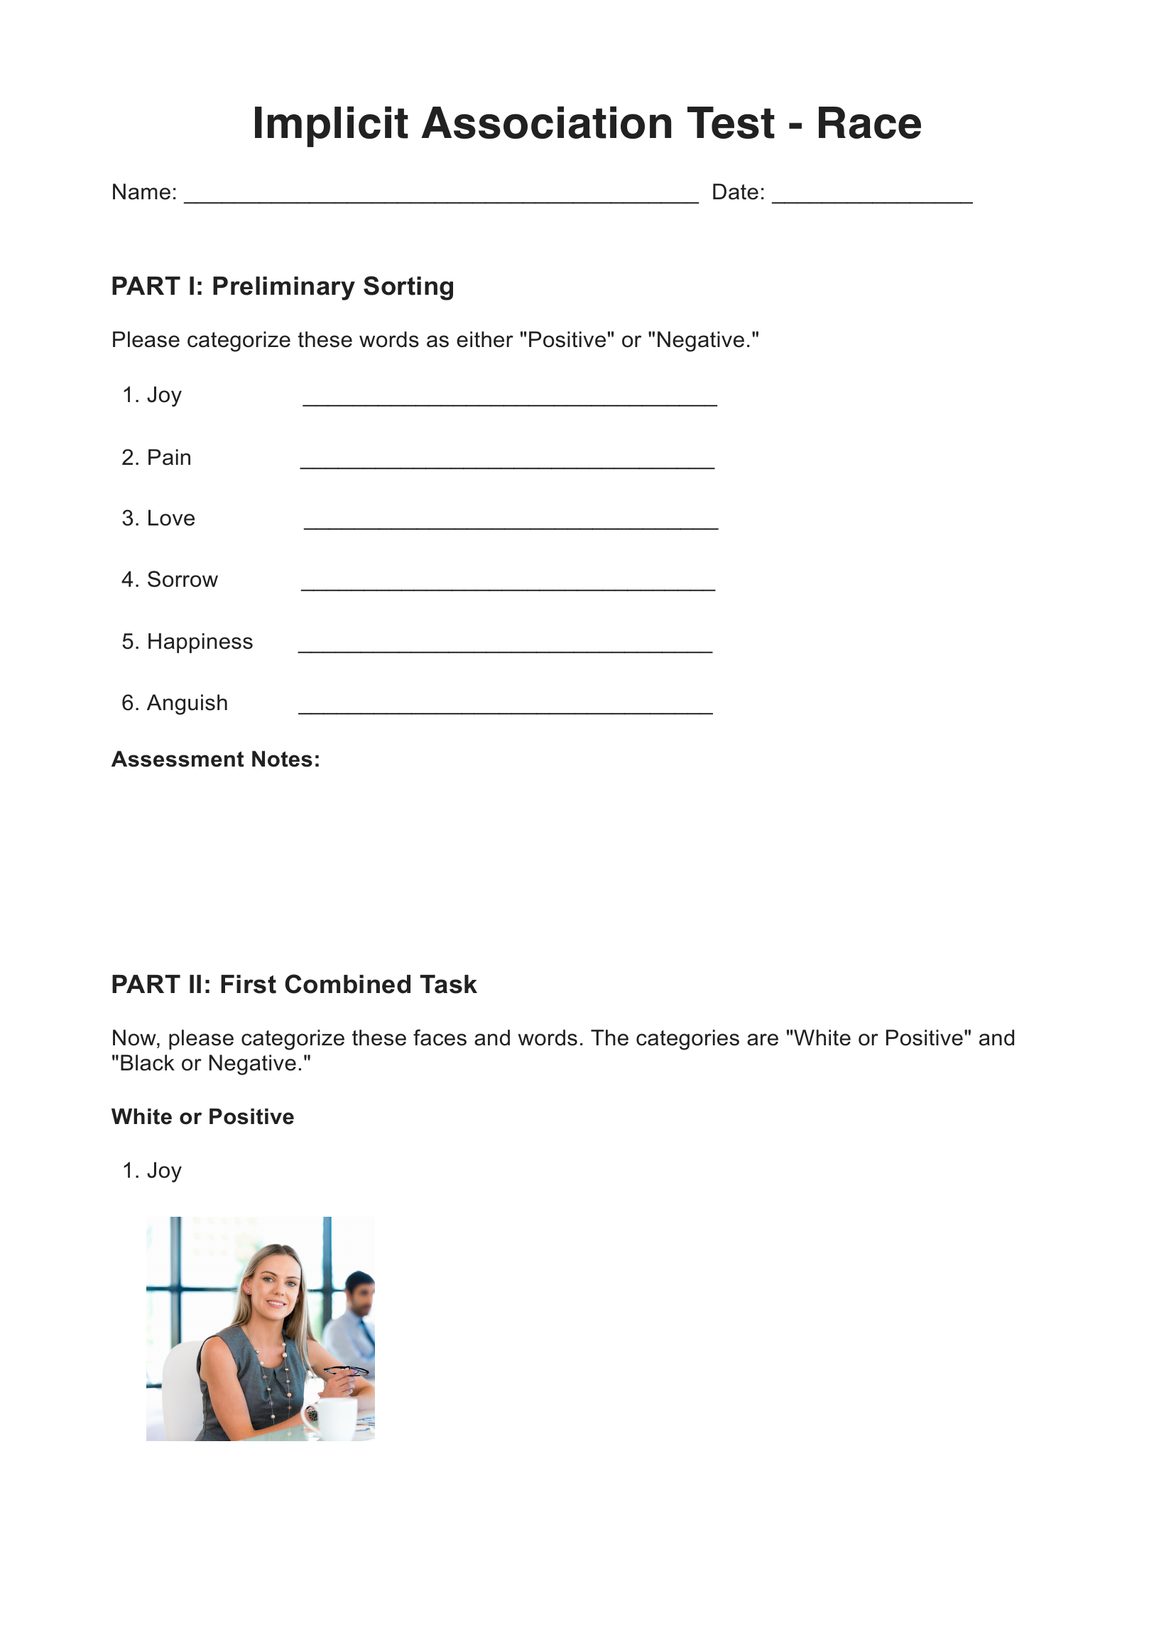 Implicit Association Tests PDF Example